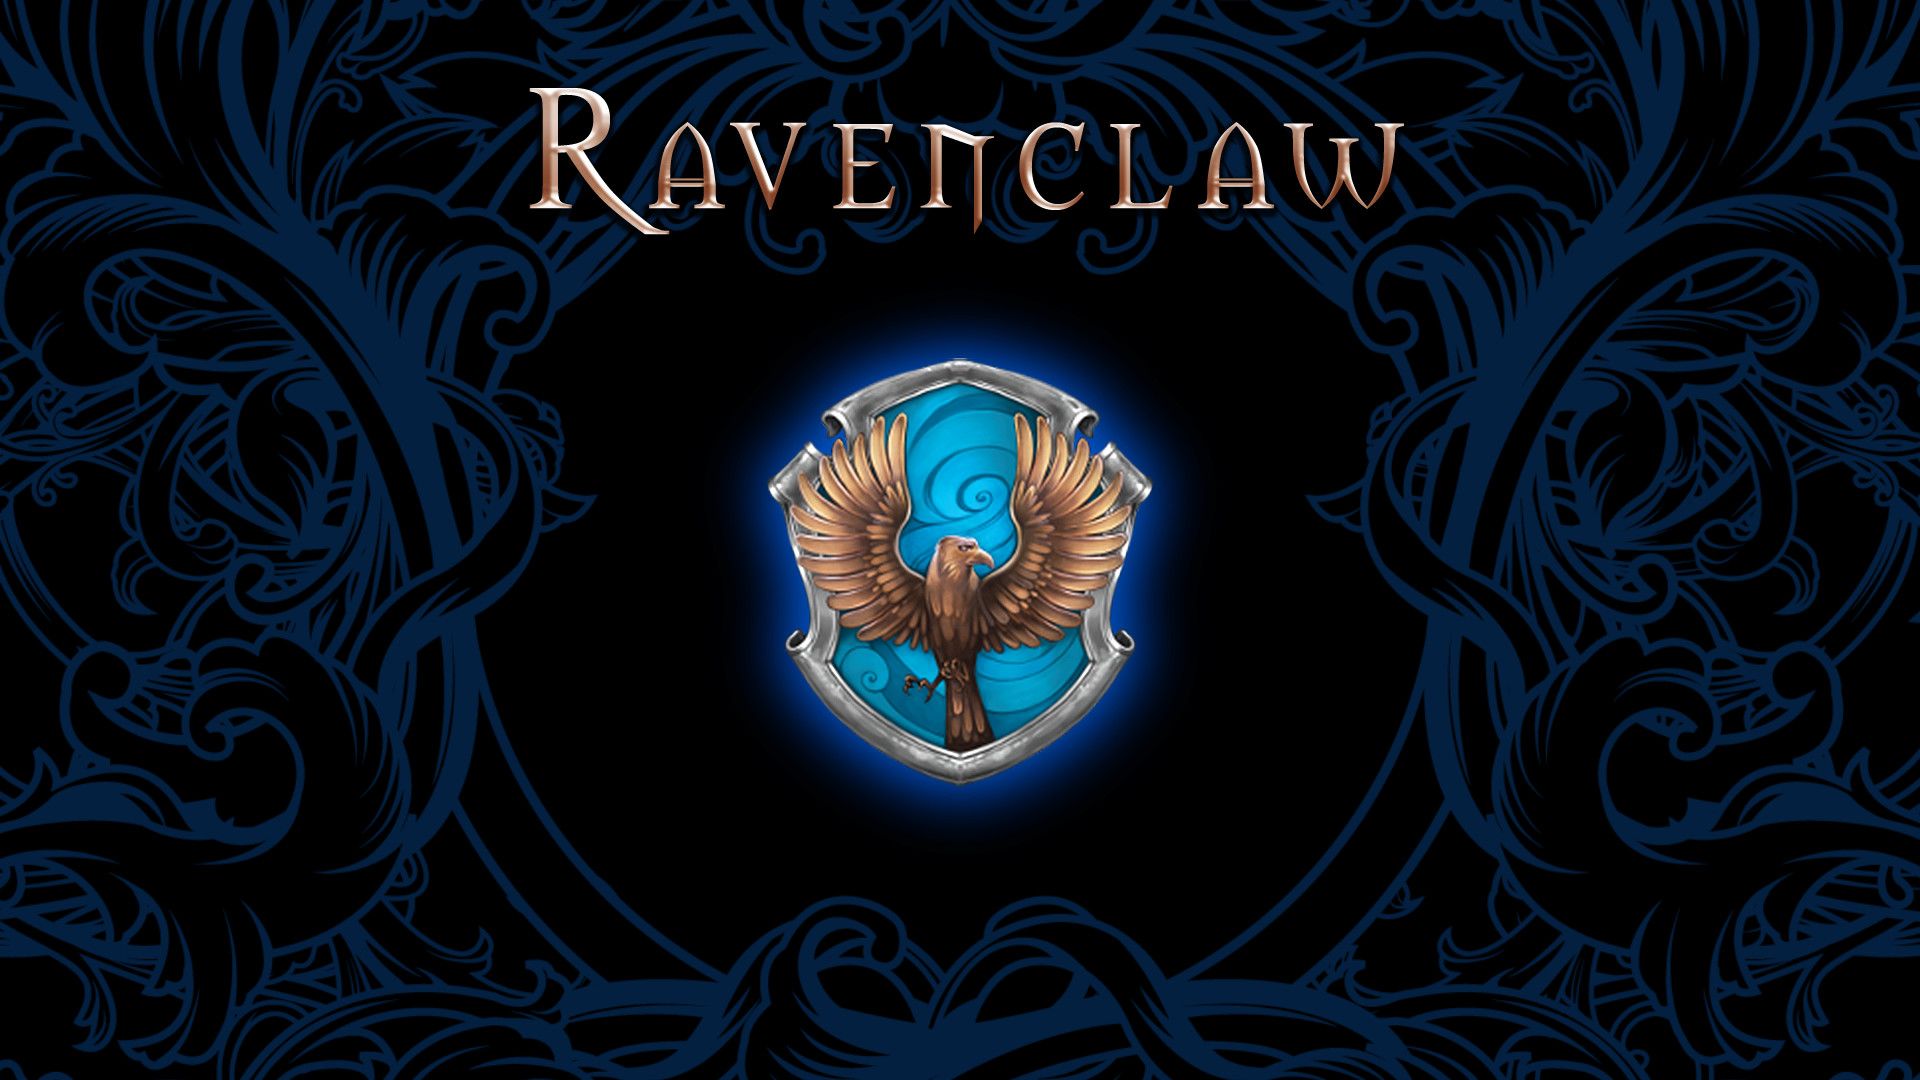 House Ravenclaw Crest Wallpaper